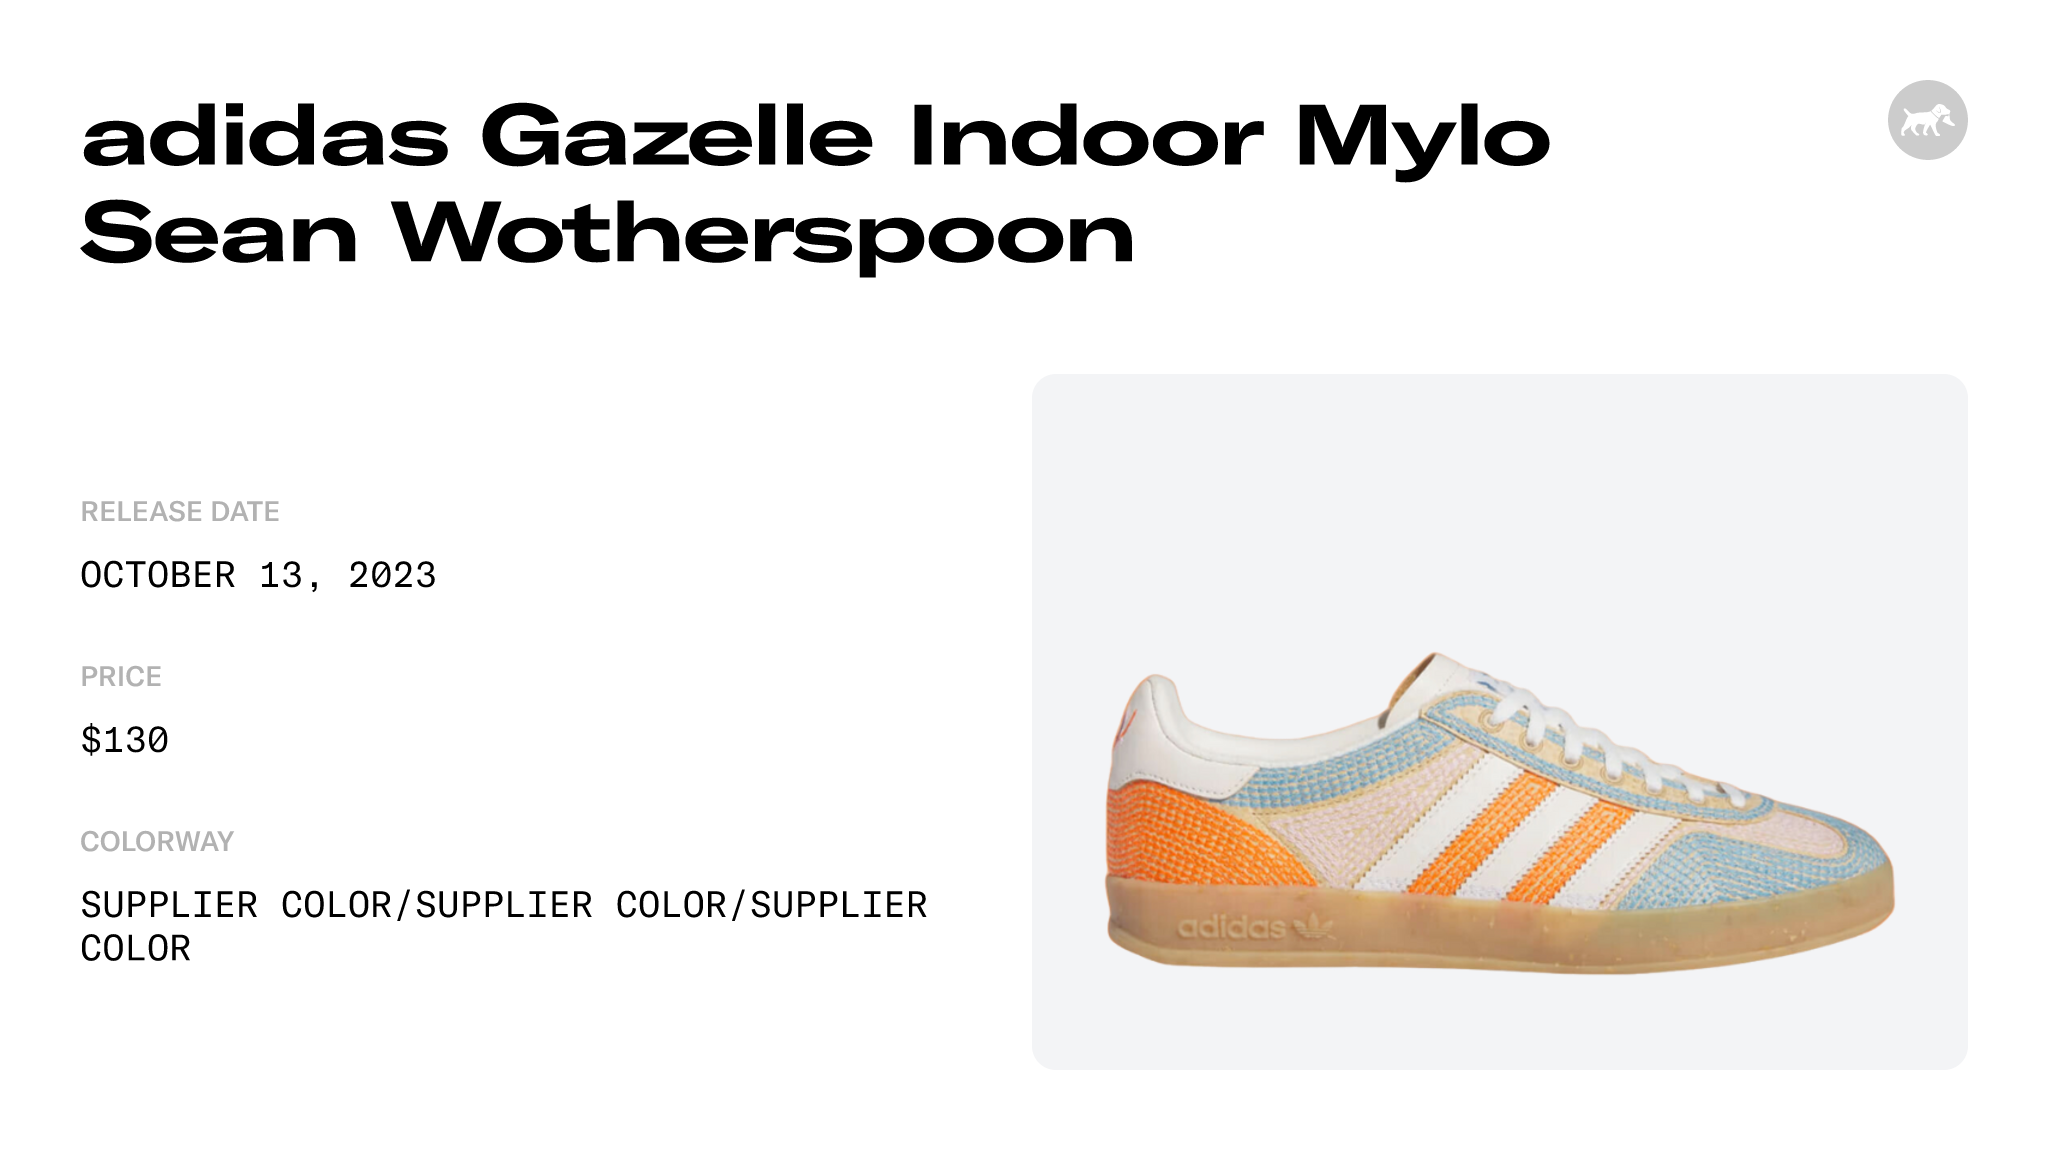 Sean Wotherspoon x adidas Gazelle Indoor Mylo ID2686